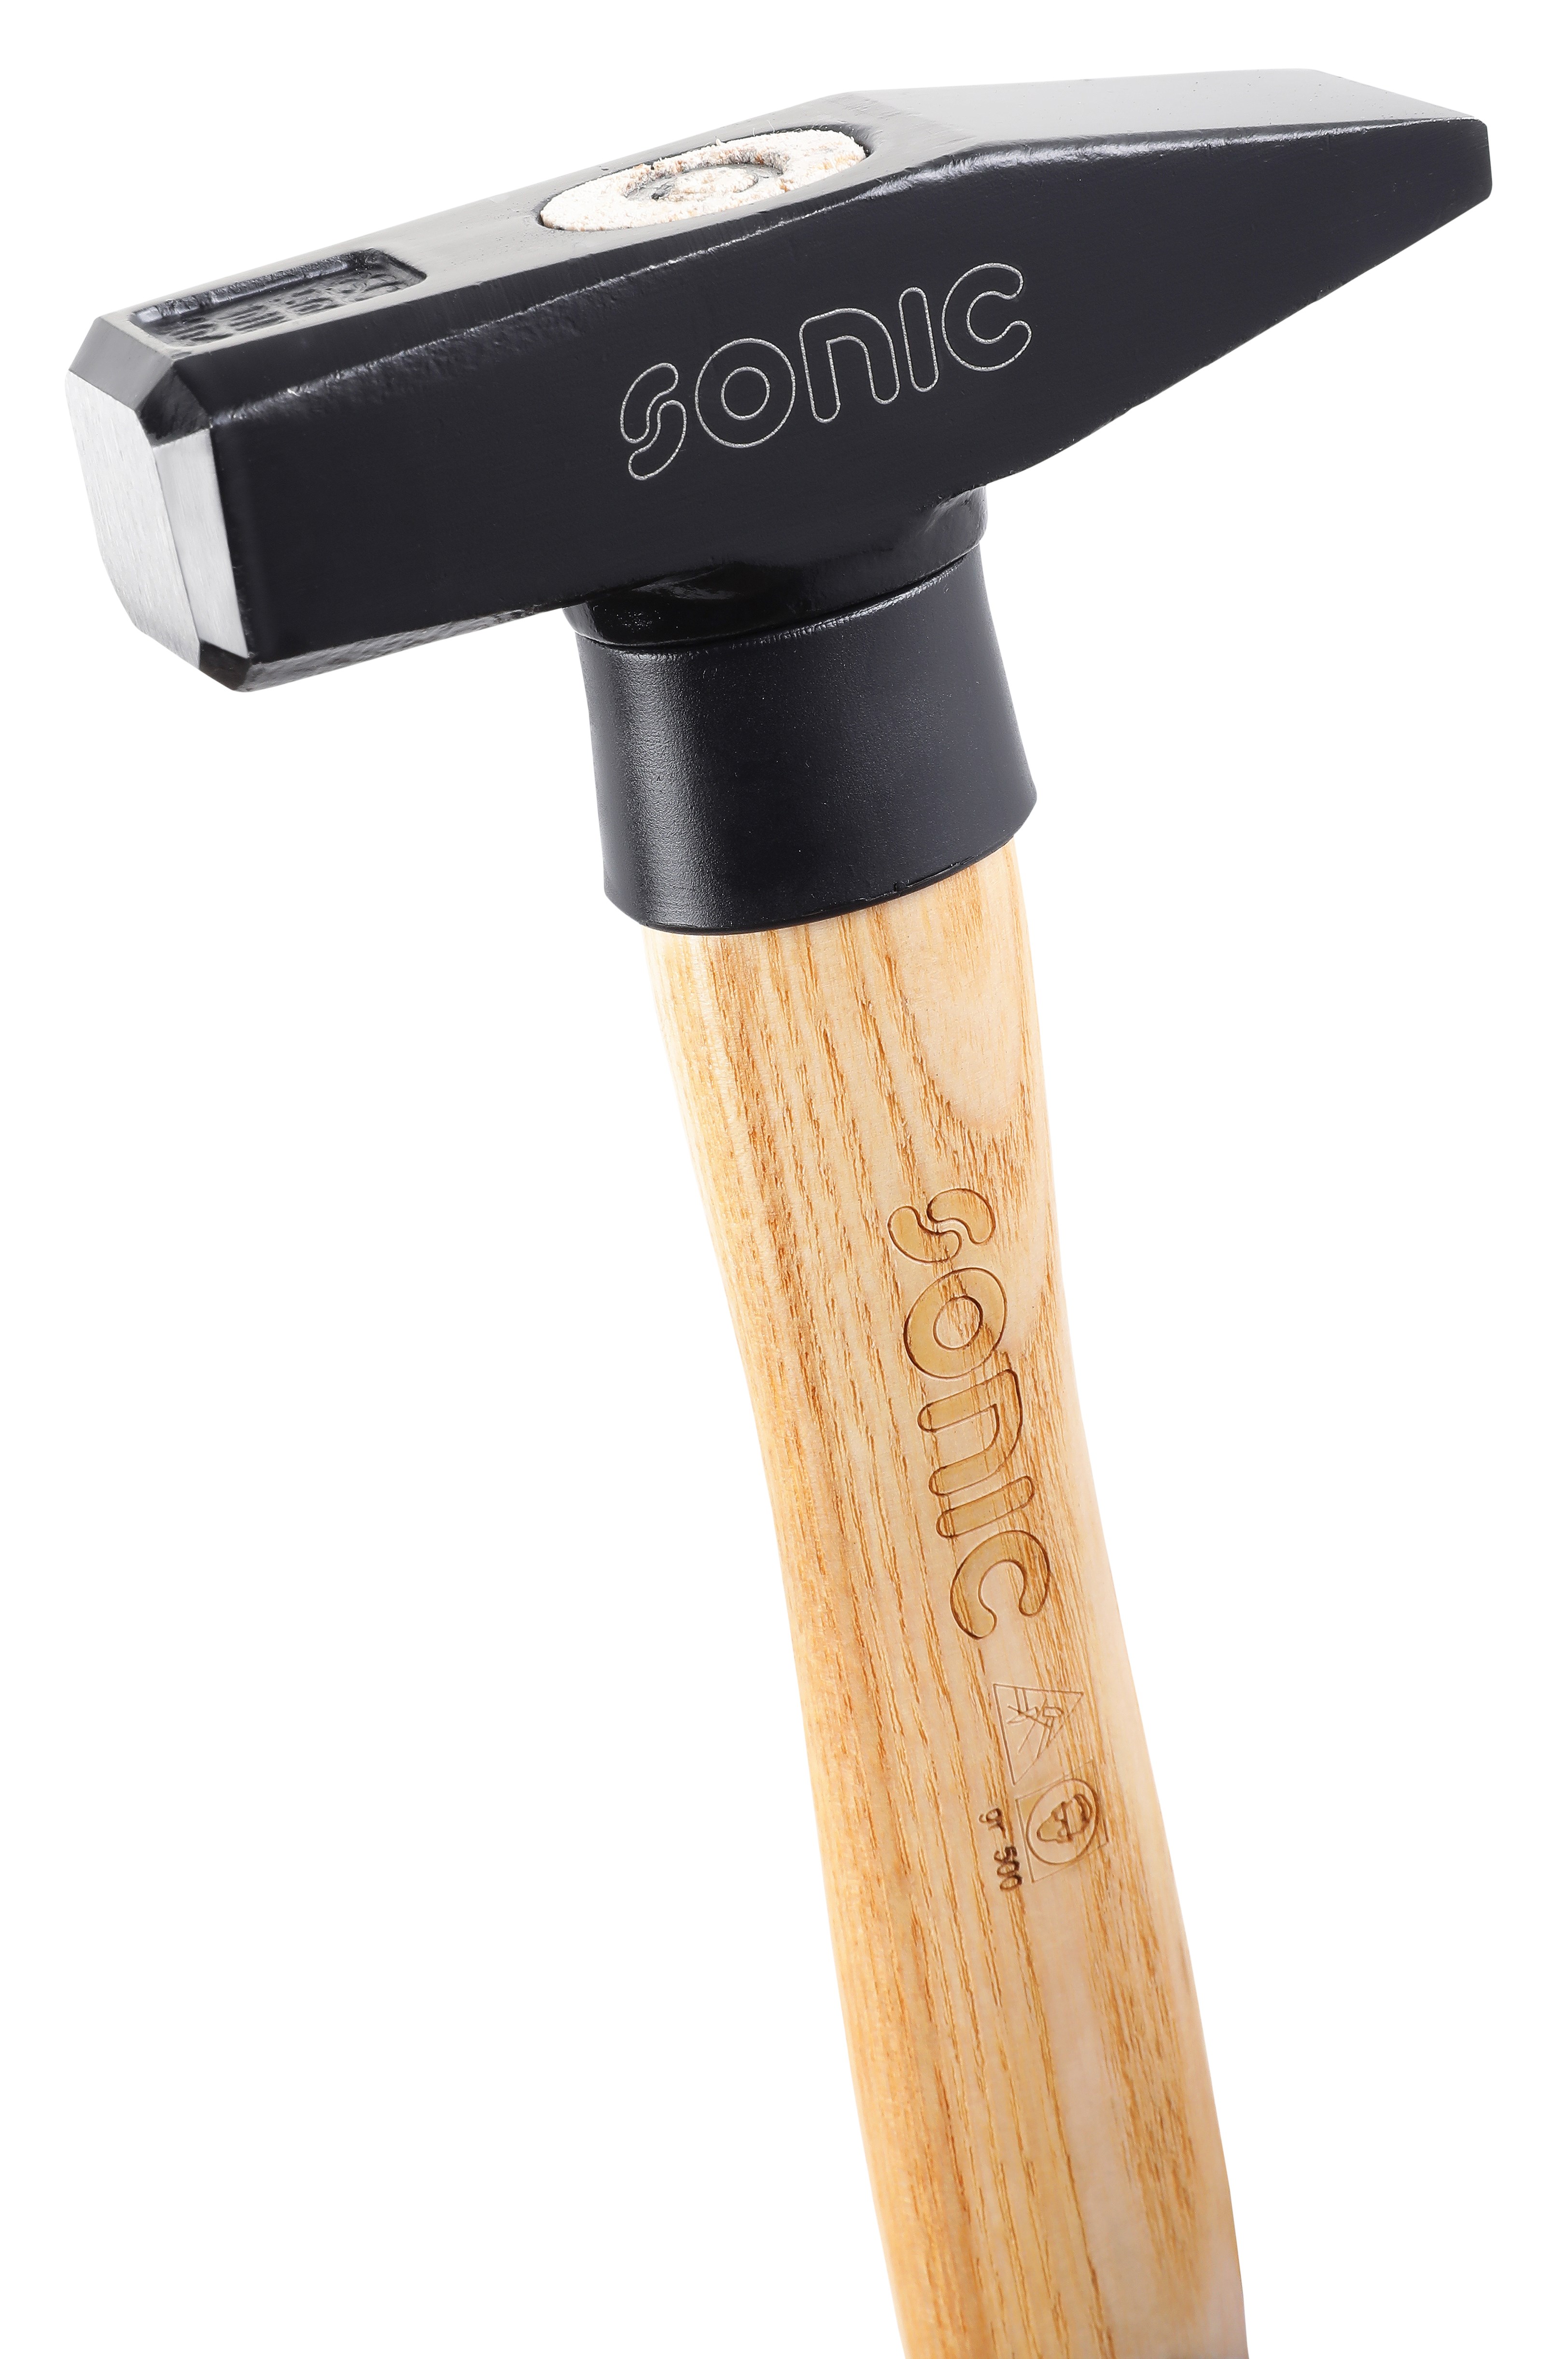 Hammer mit Holzgriff 500g